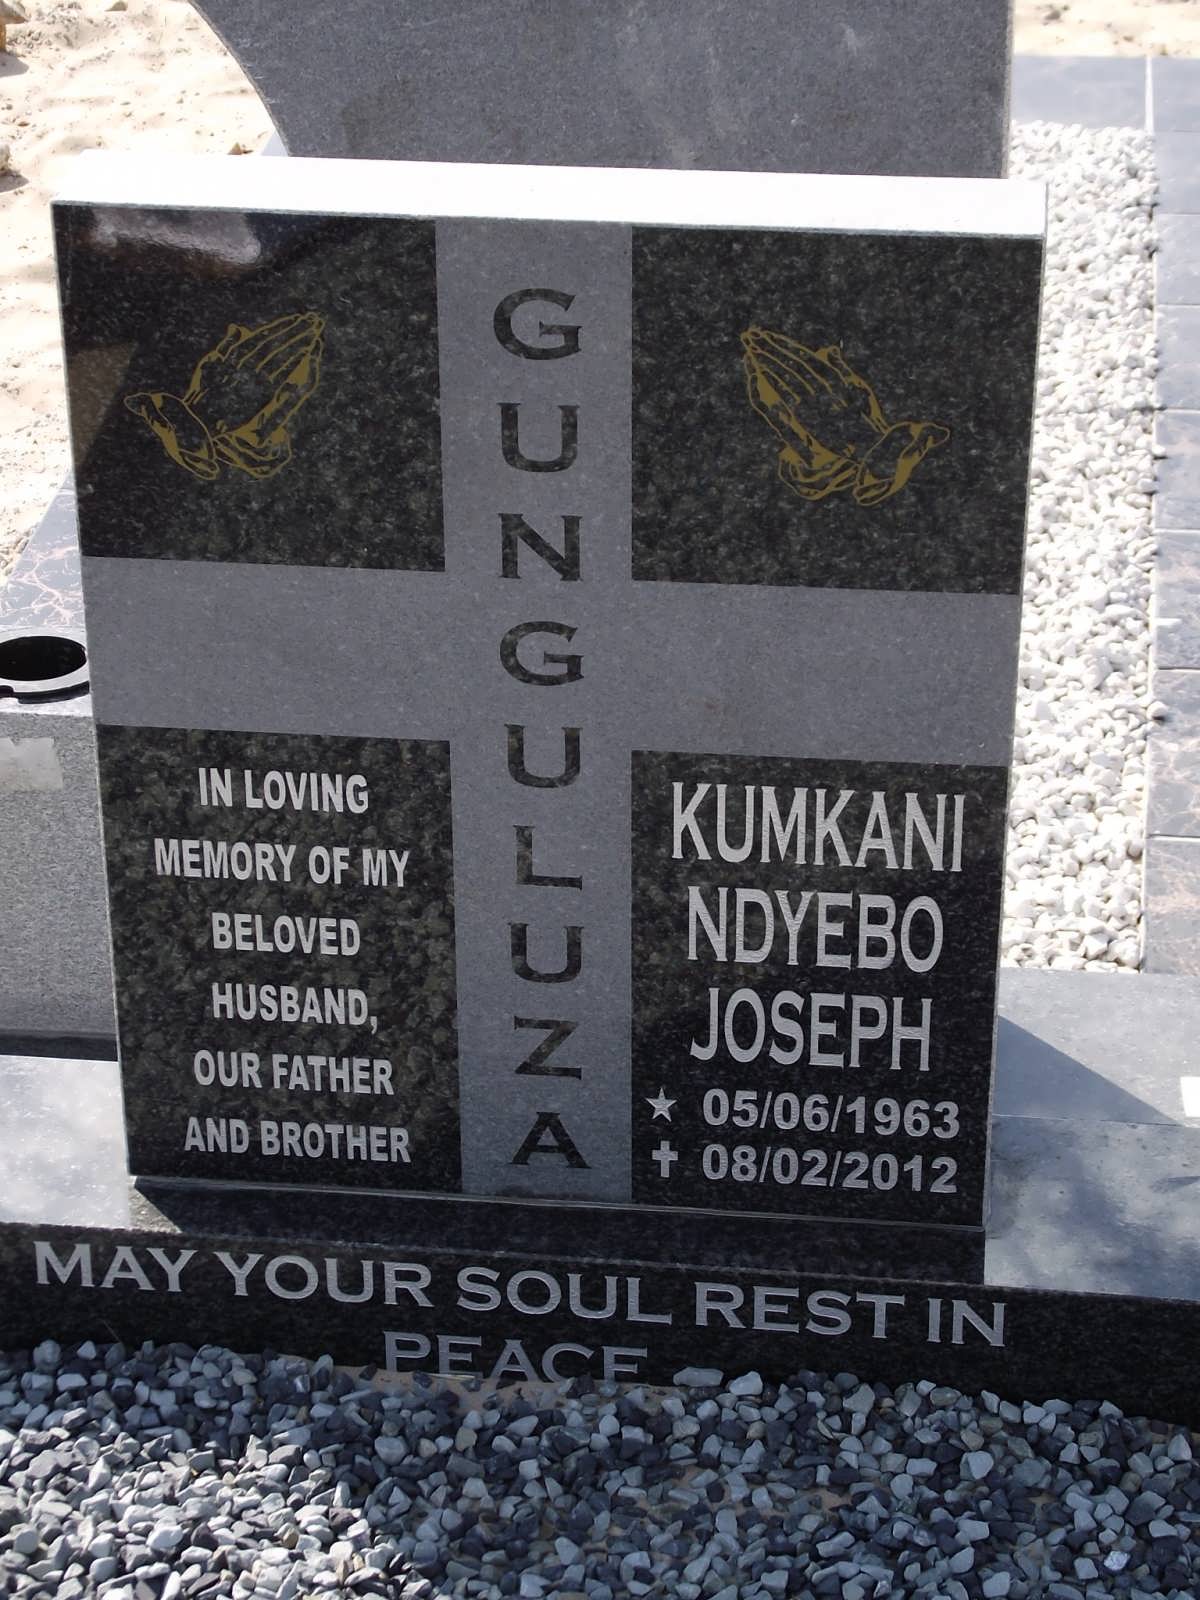 GUNGULUZA Kumkani Ndyebo Joseph 1963-2012